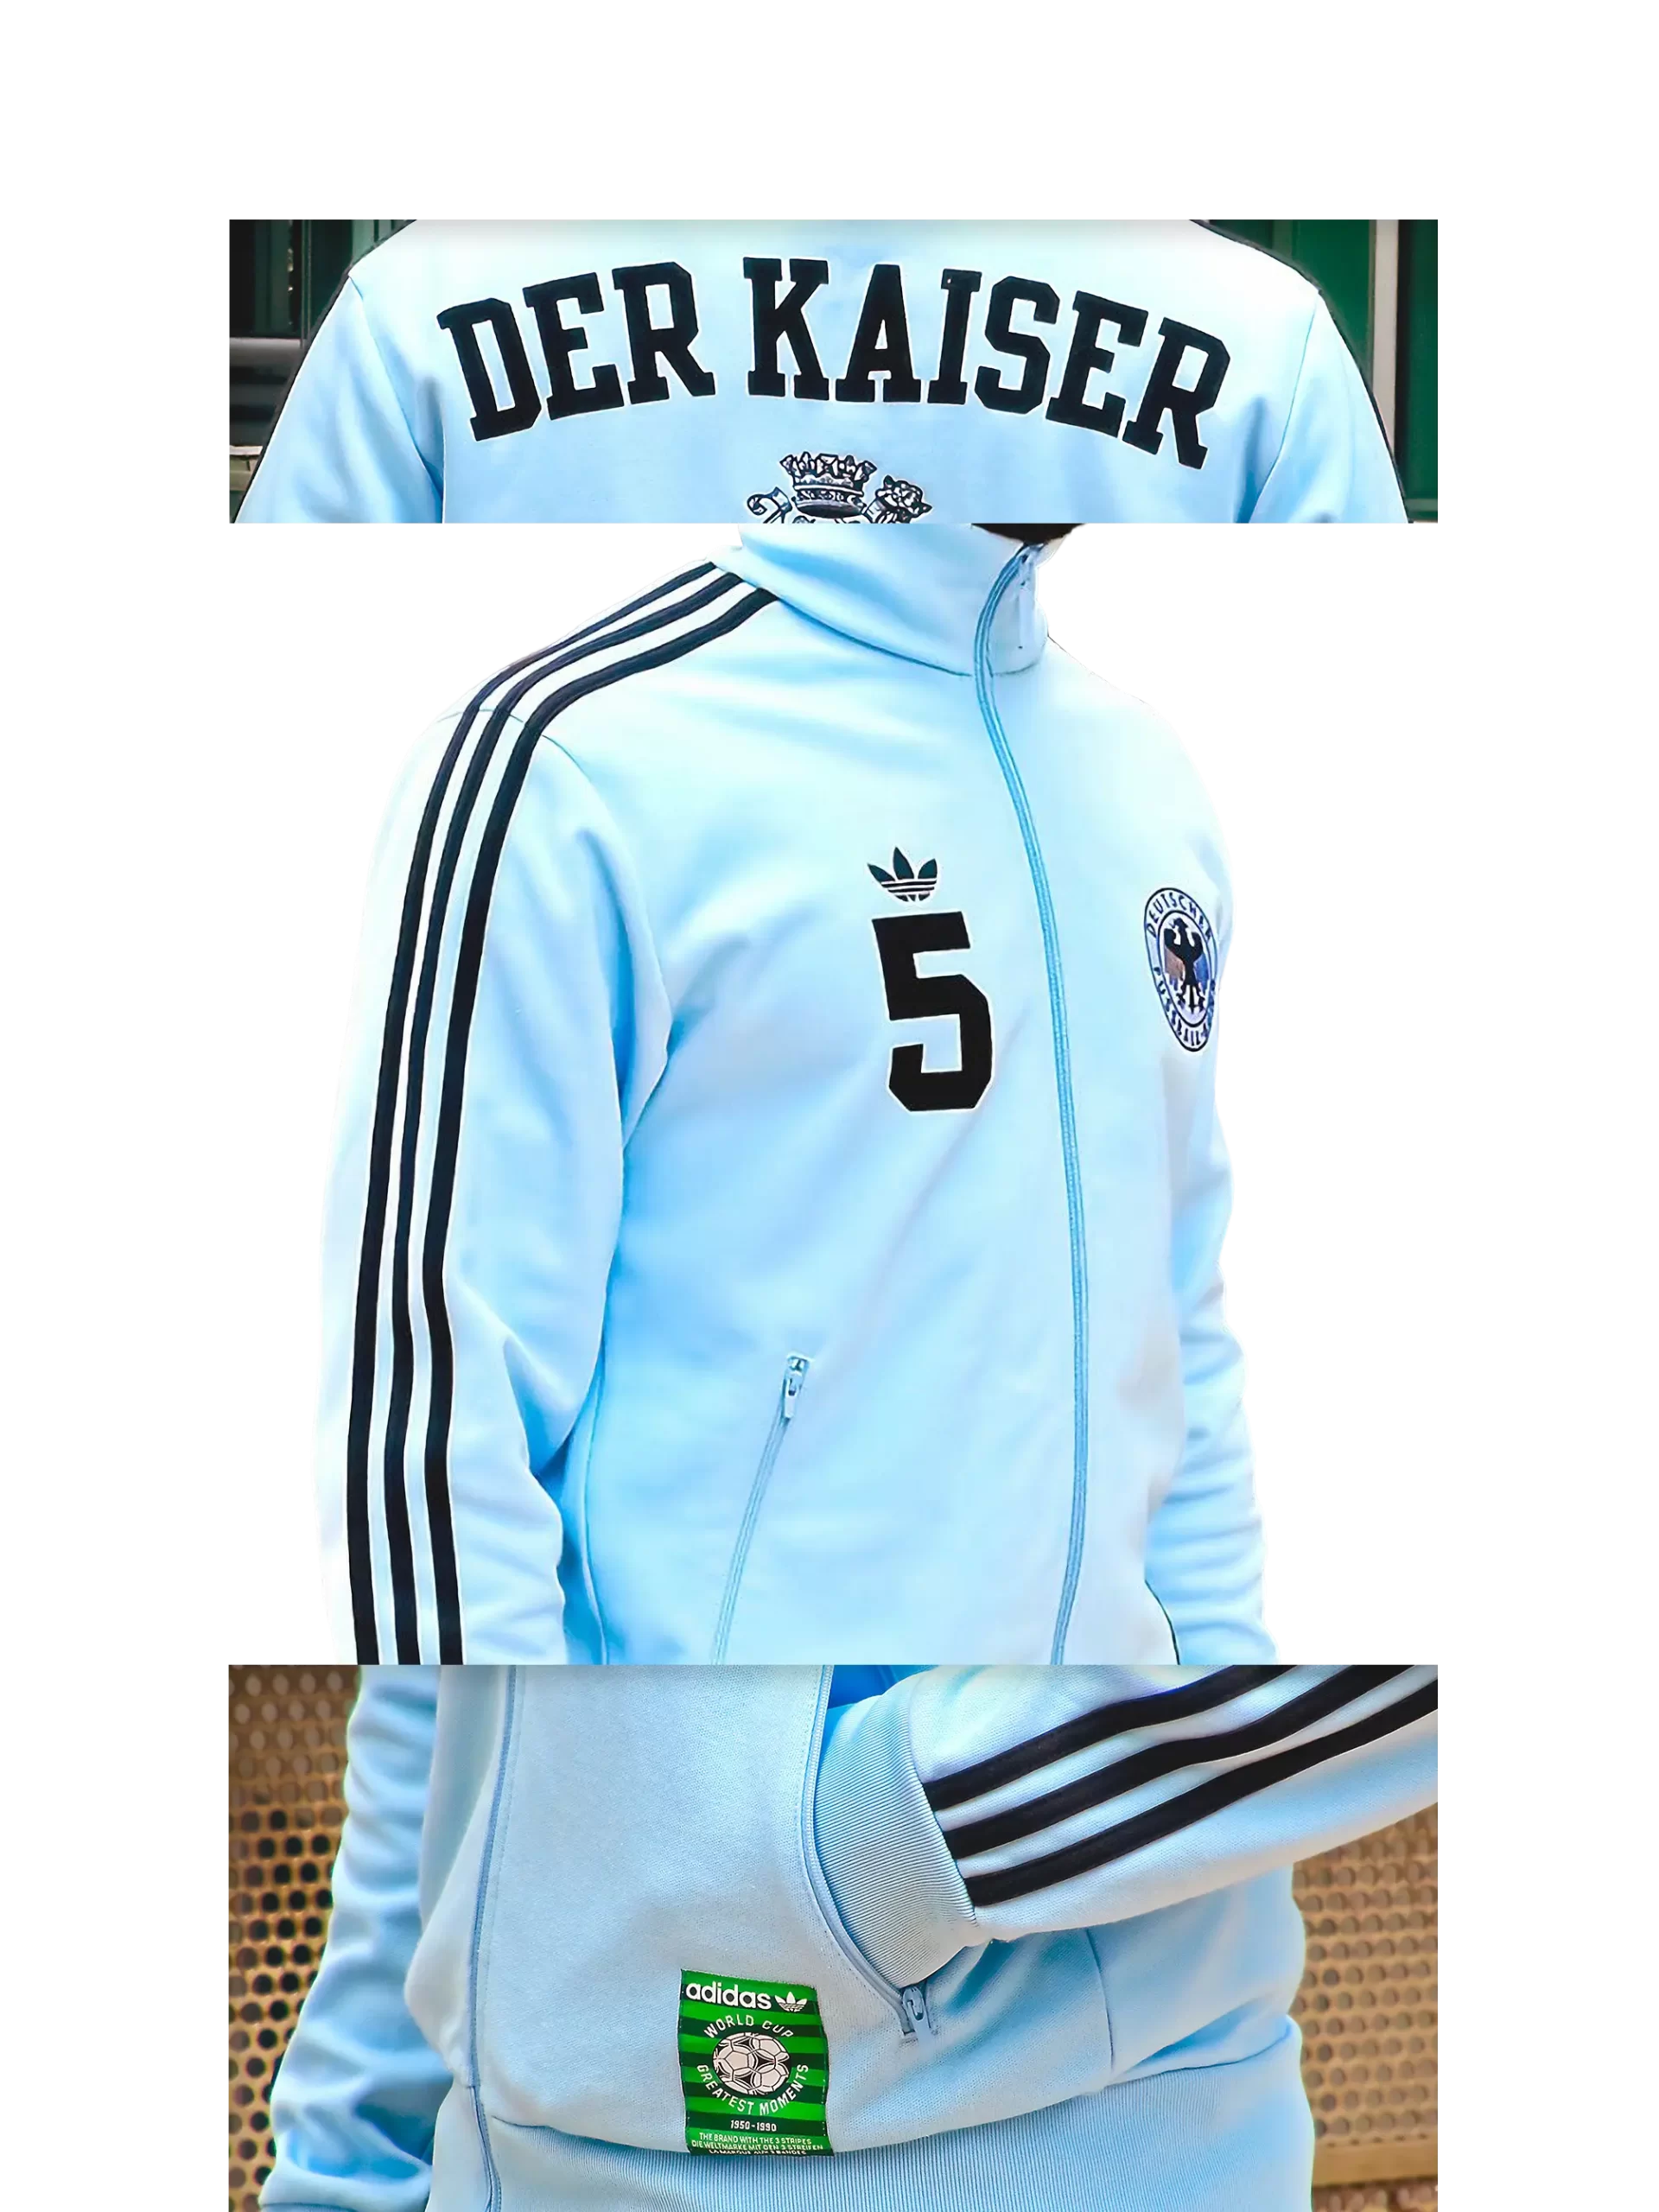 Men's 2005 Der Kaiser '74 Track Top by Adidas Originals: Gorgeous (EnLawded.com file #lmchk40150ip2y121349kg9st)